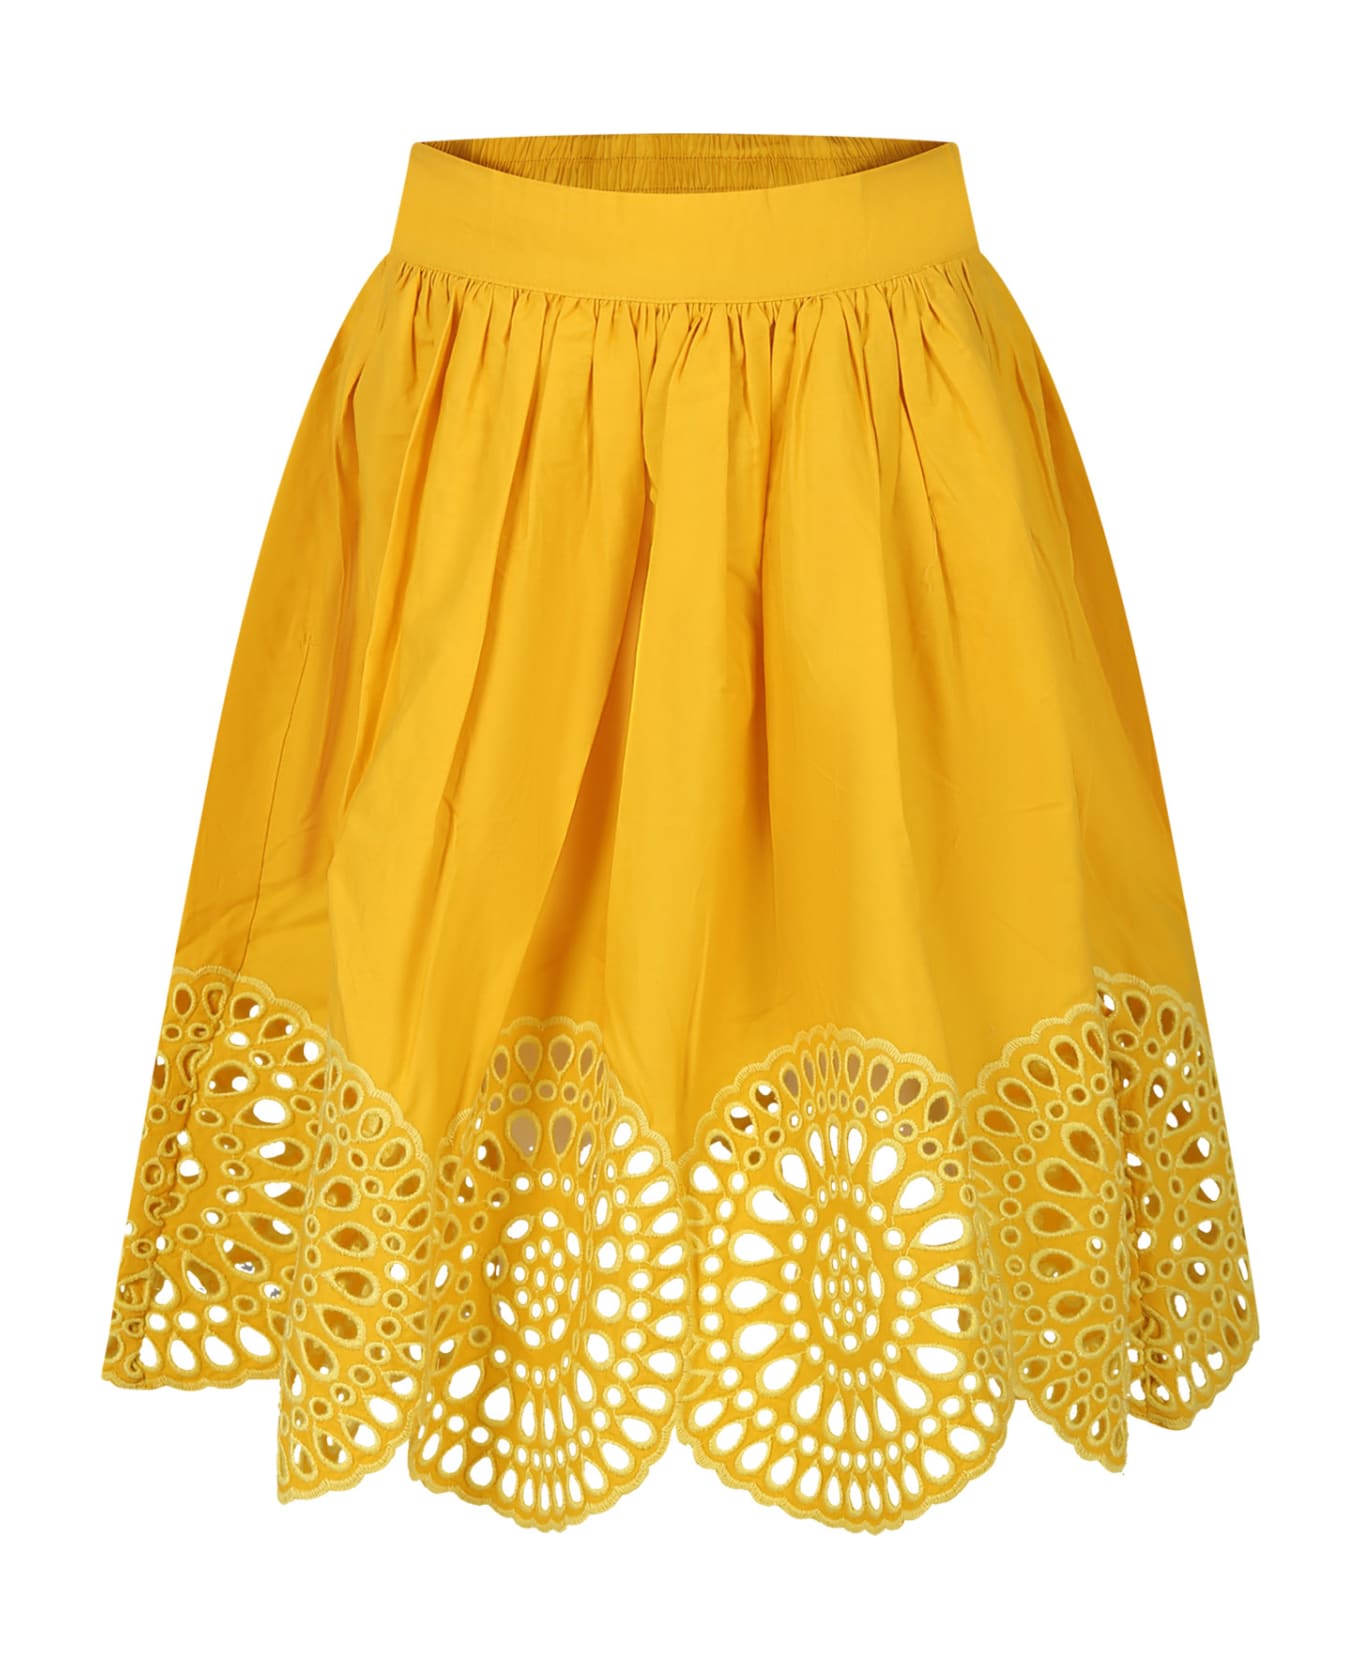 Stella McCartney Kids Yellow Skirt For Girl With Macramé Lace. - Yellow